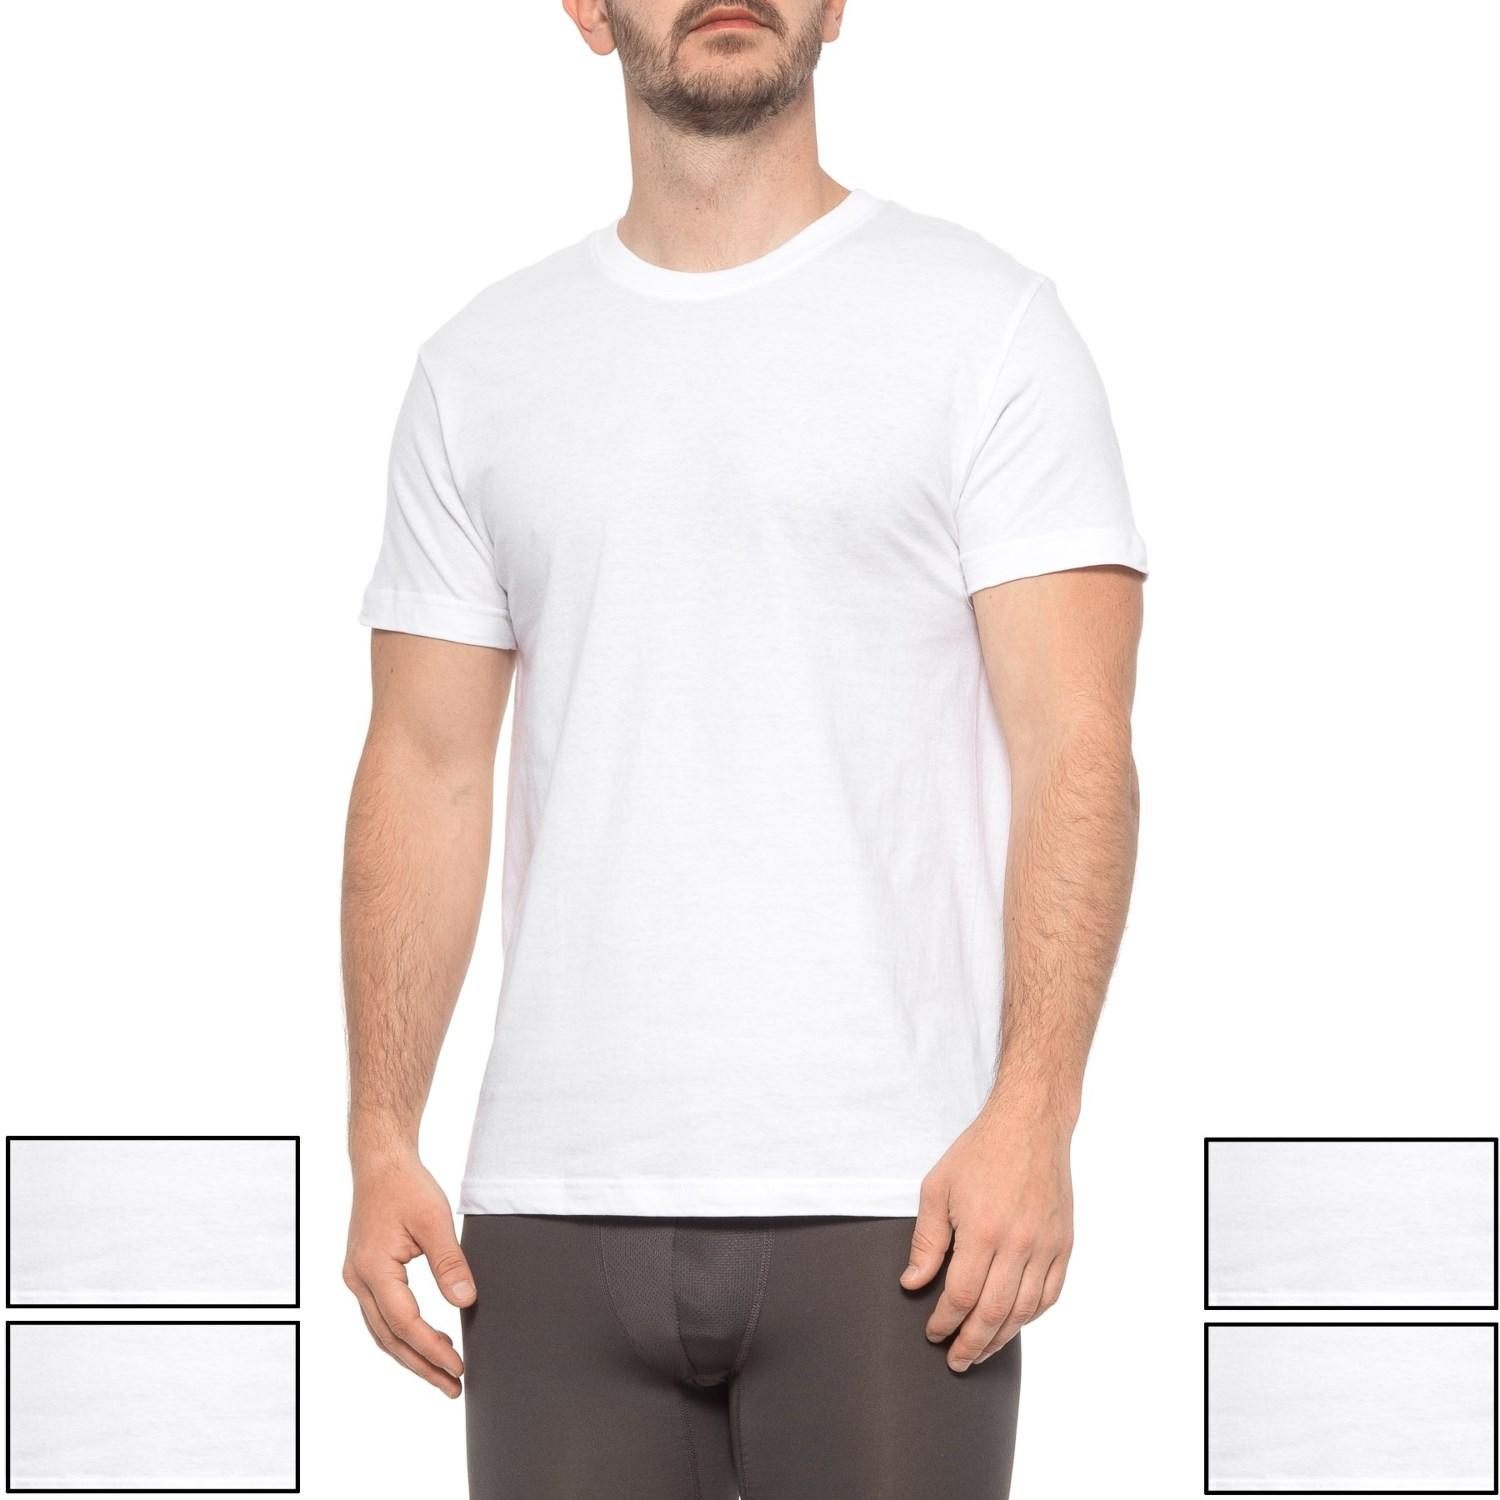 Reebok White Crew Neck T-shirts in White for Men - Lyst